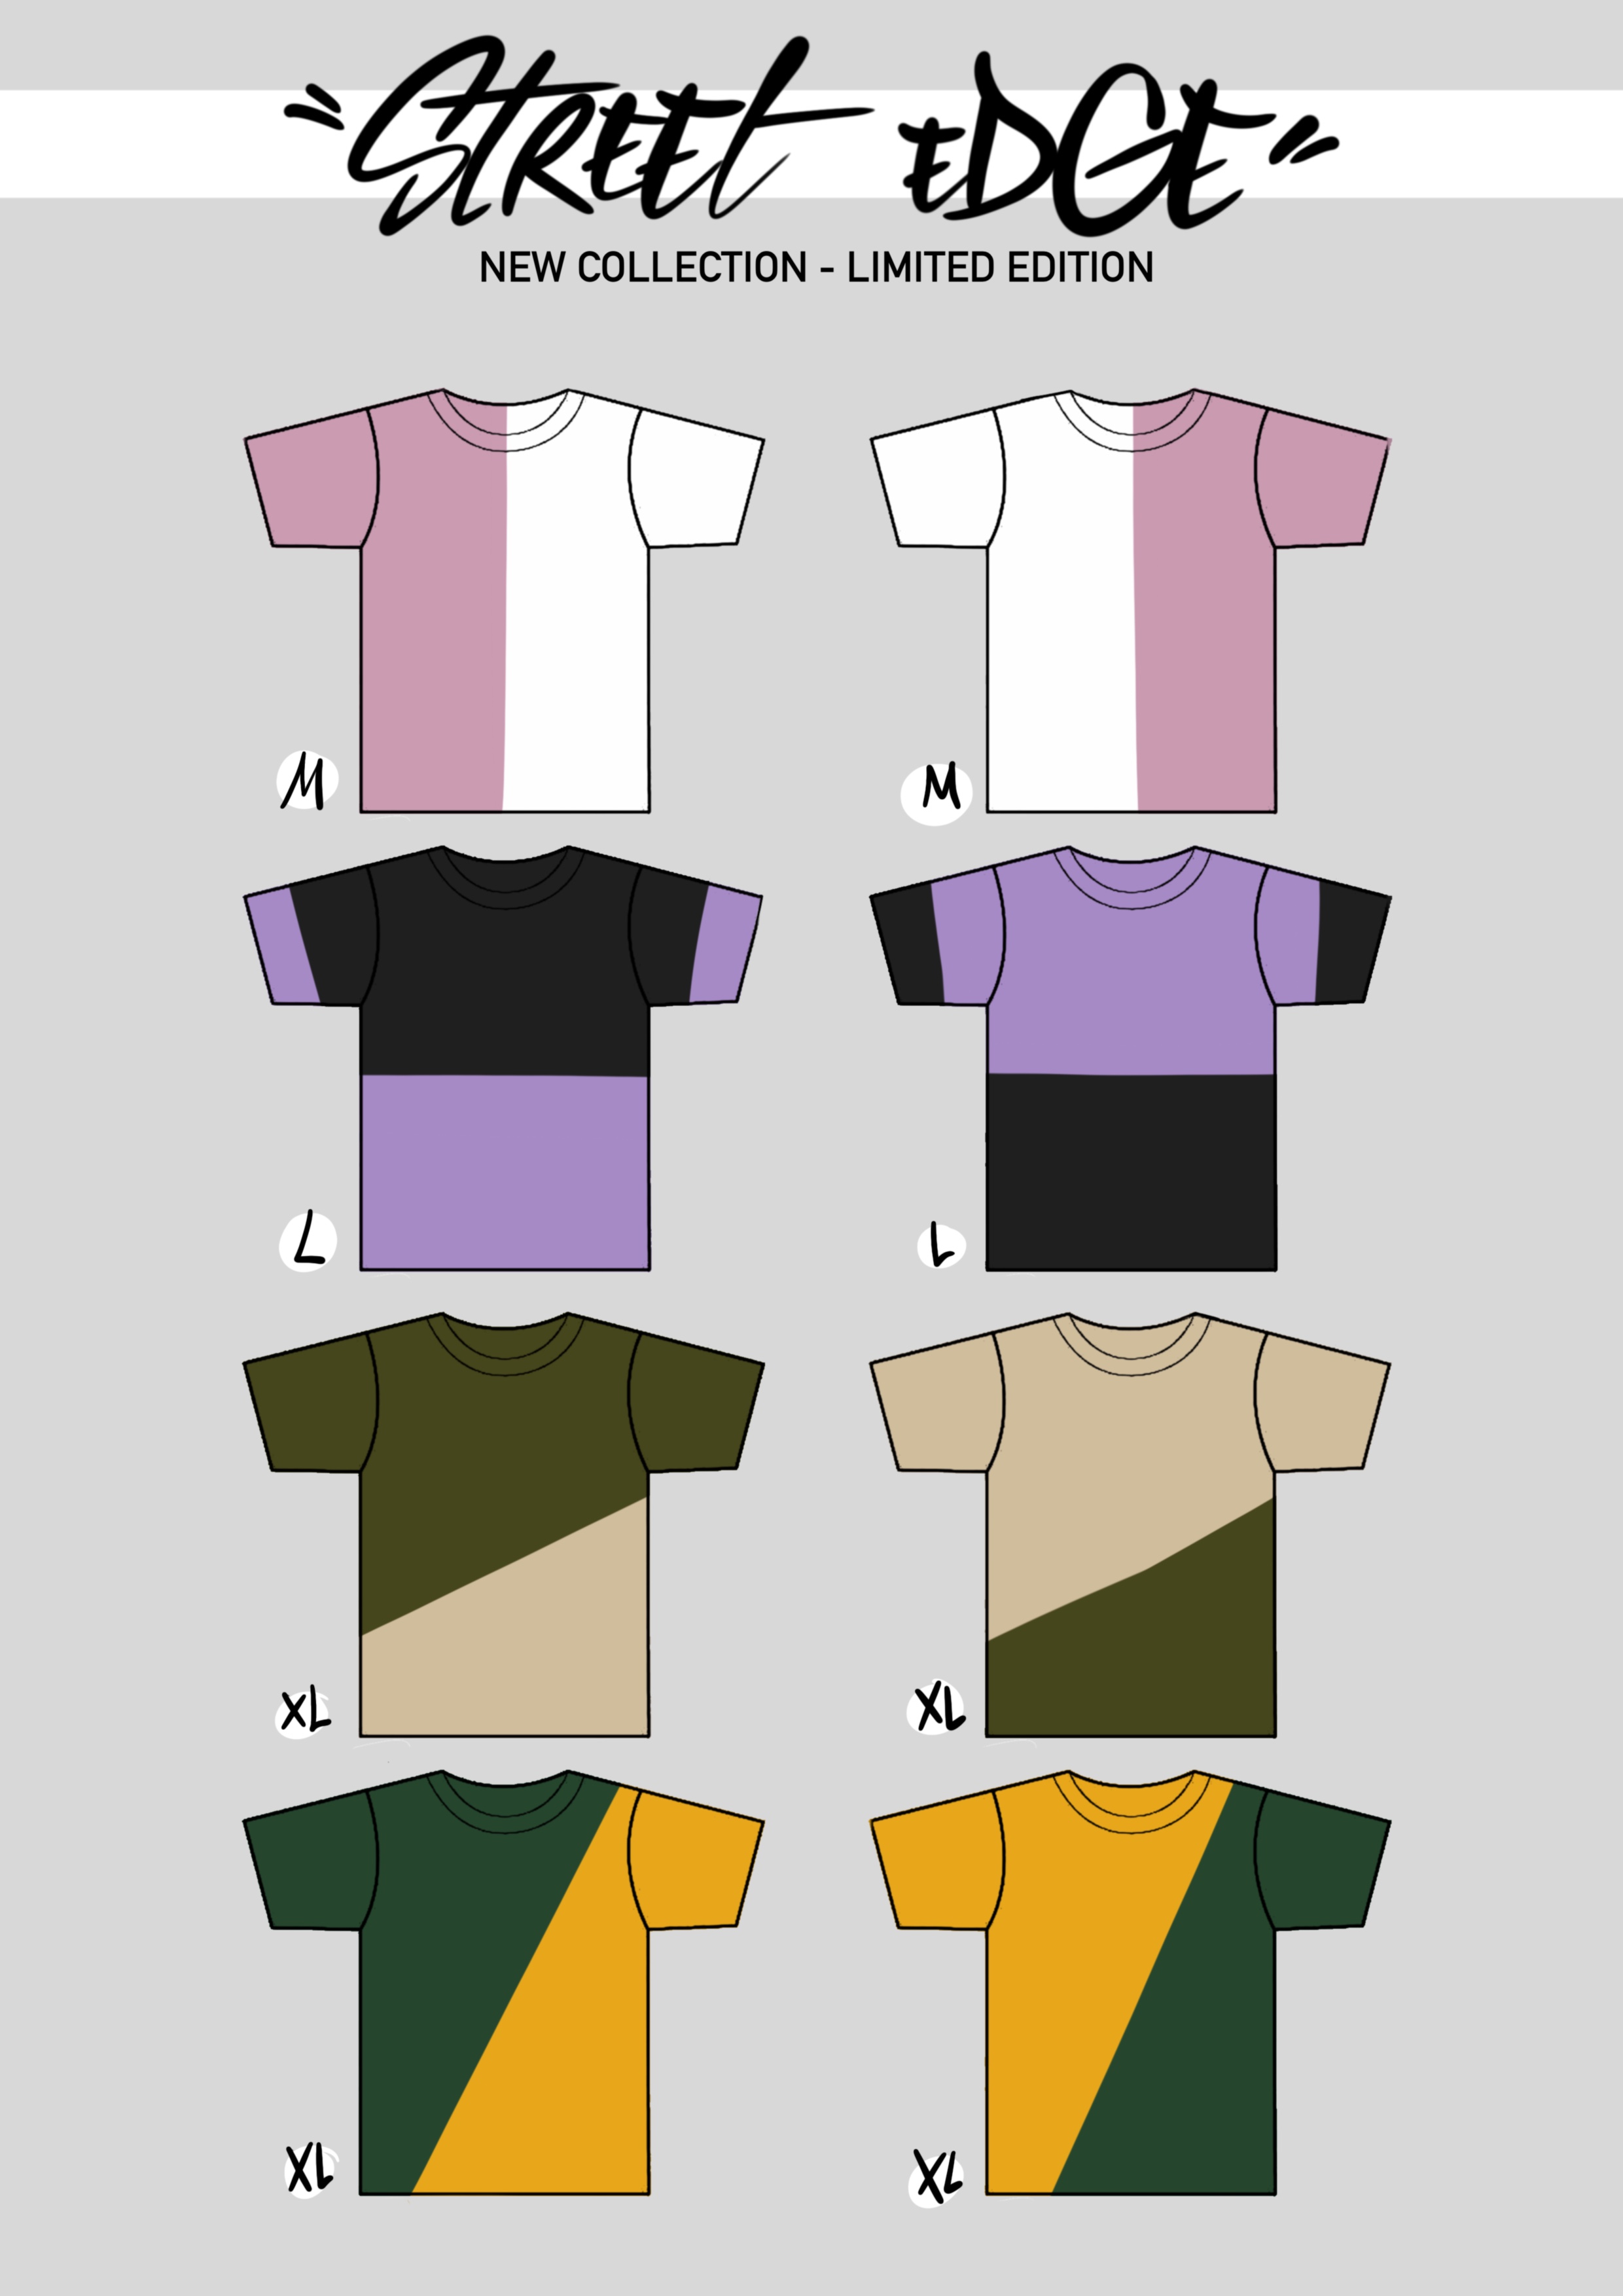 Size street edge t shirt design catalog clarafosca